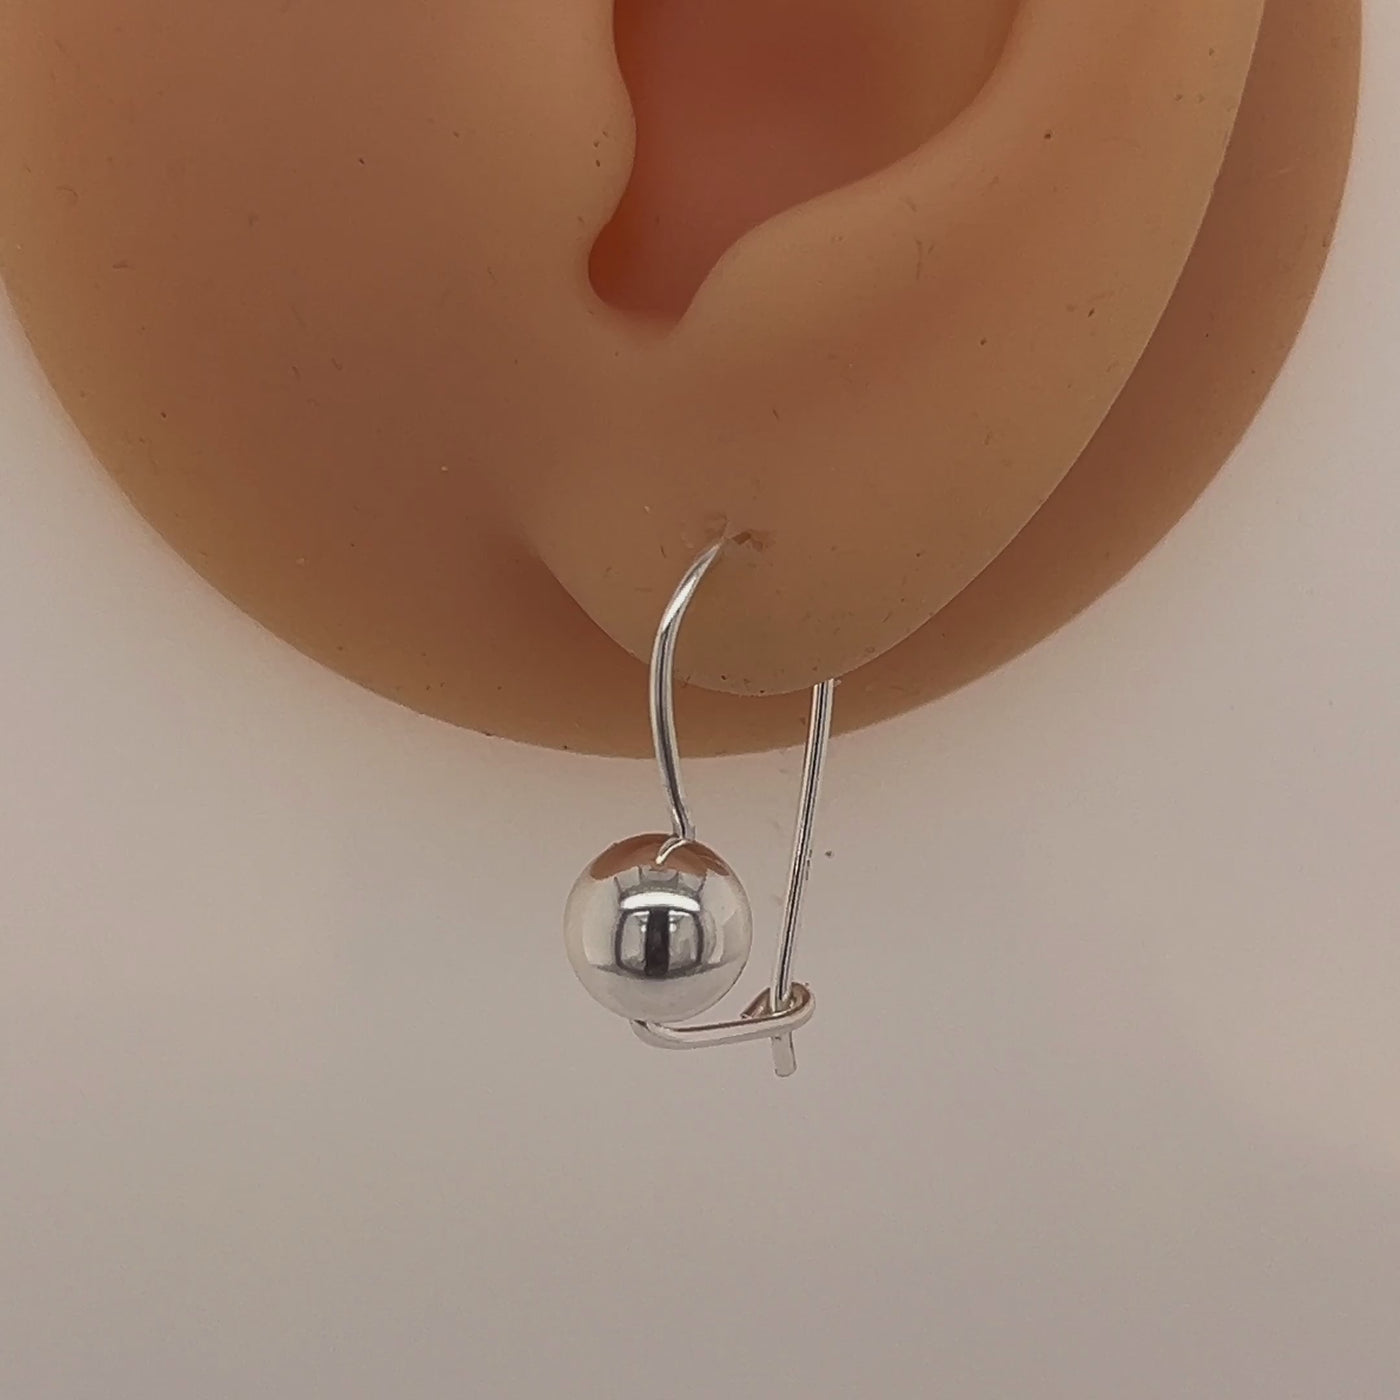 Sterling Silver Euroball Earrings